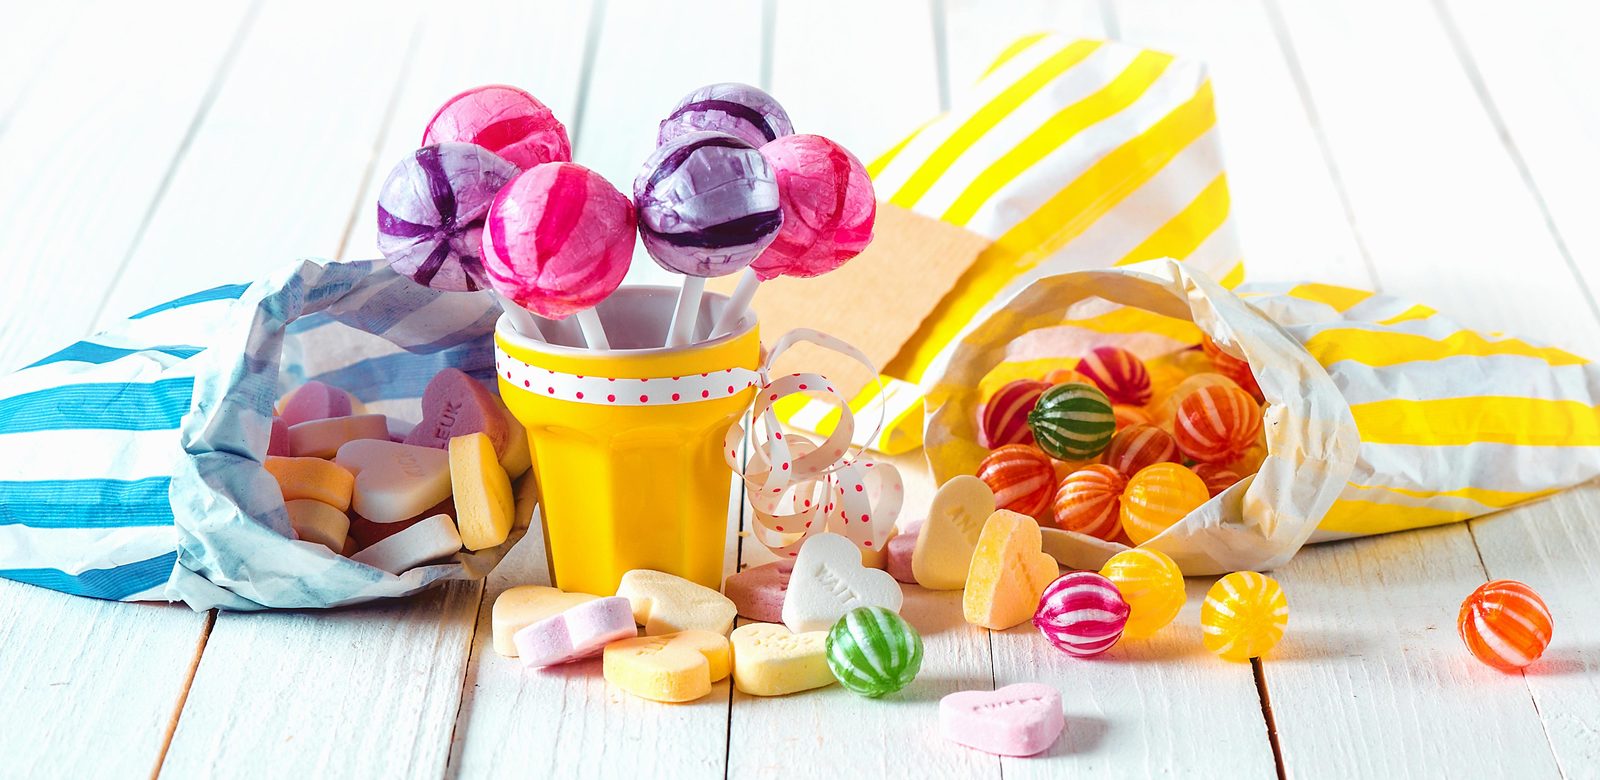 Sugary food and sweet packets should carry health warnings, medics say -  Dentistry.co.uk